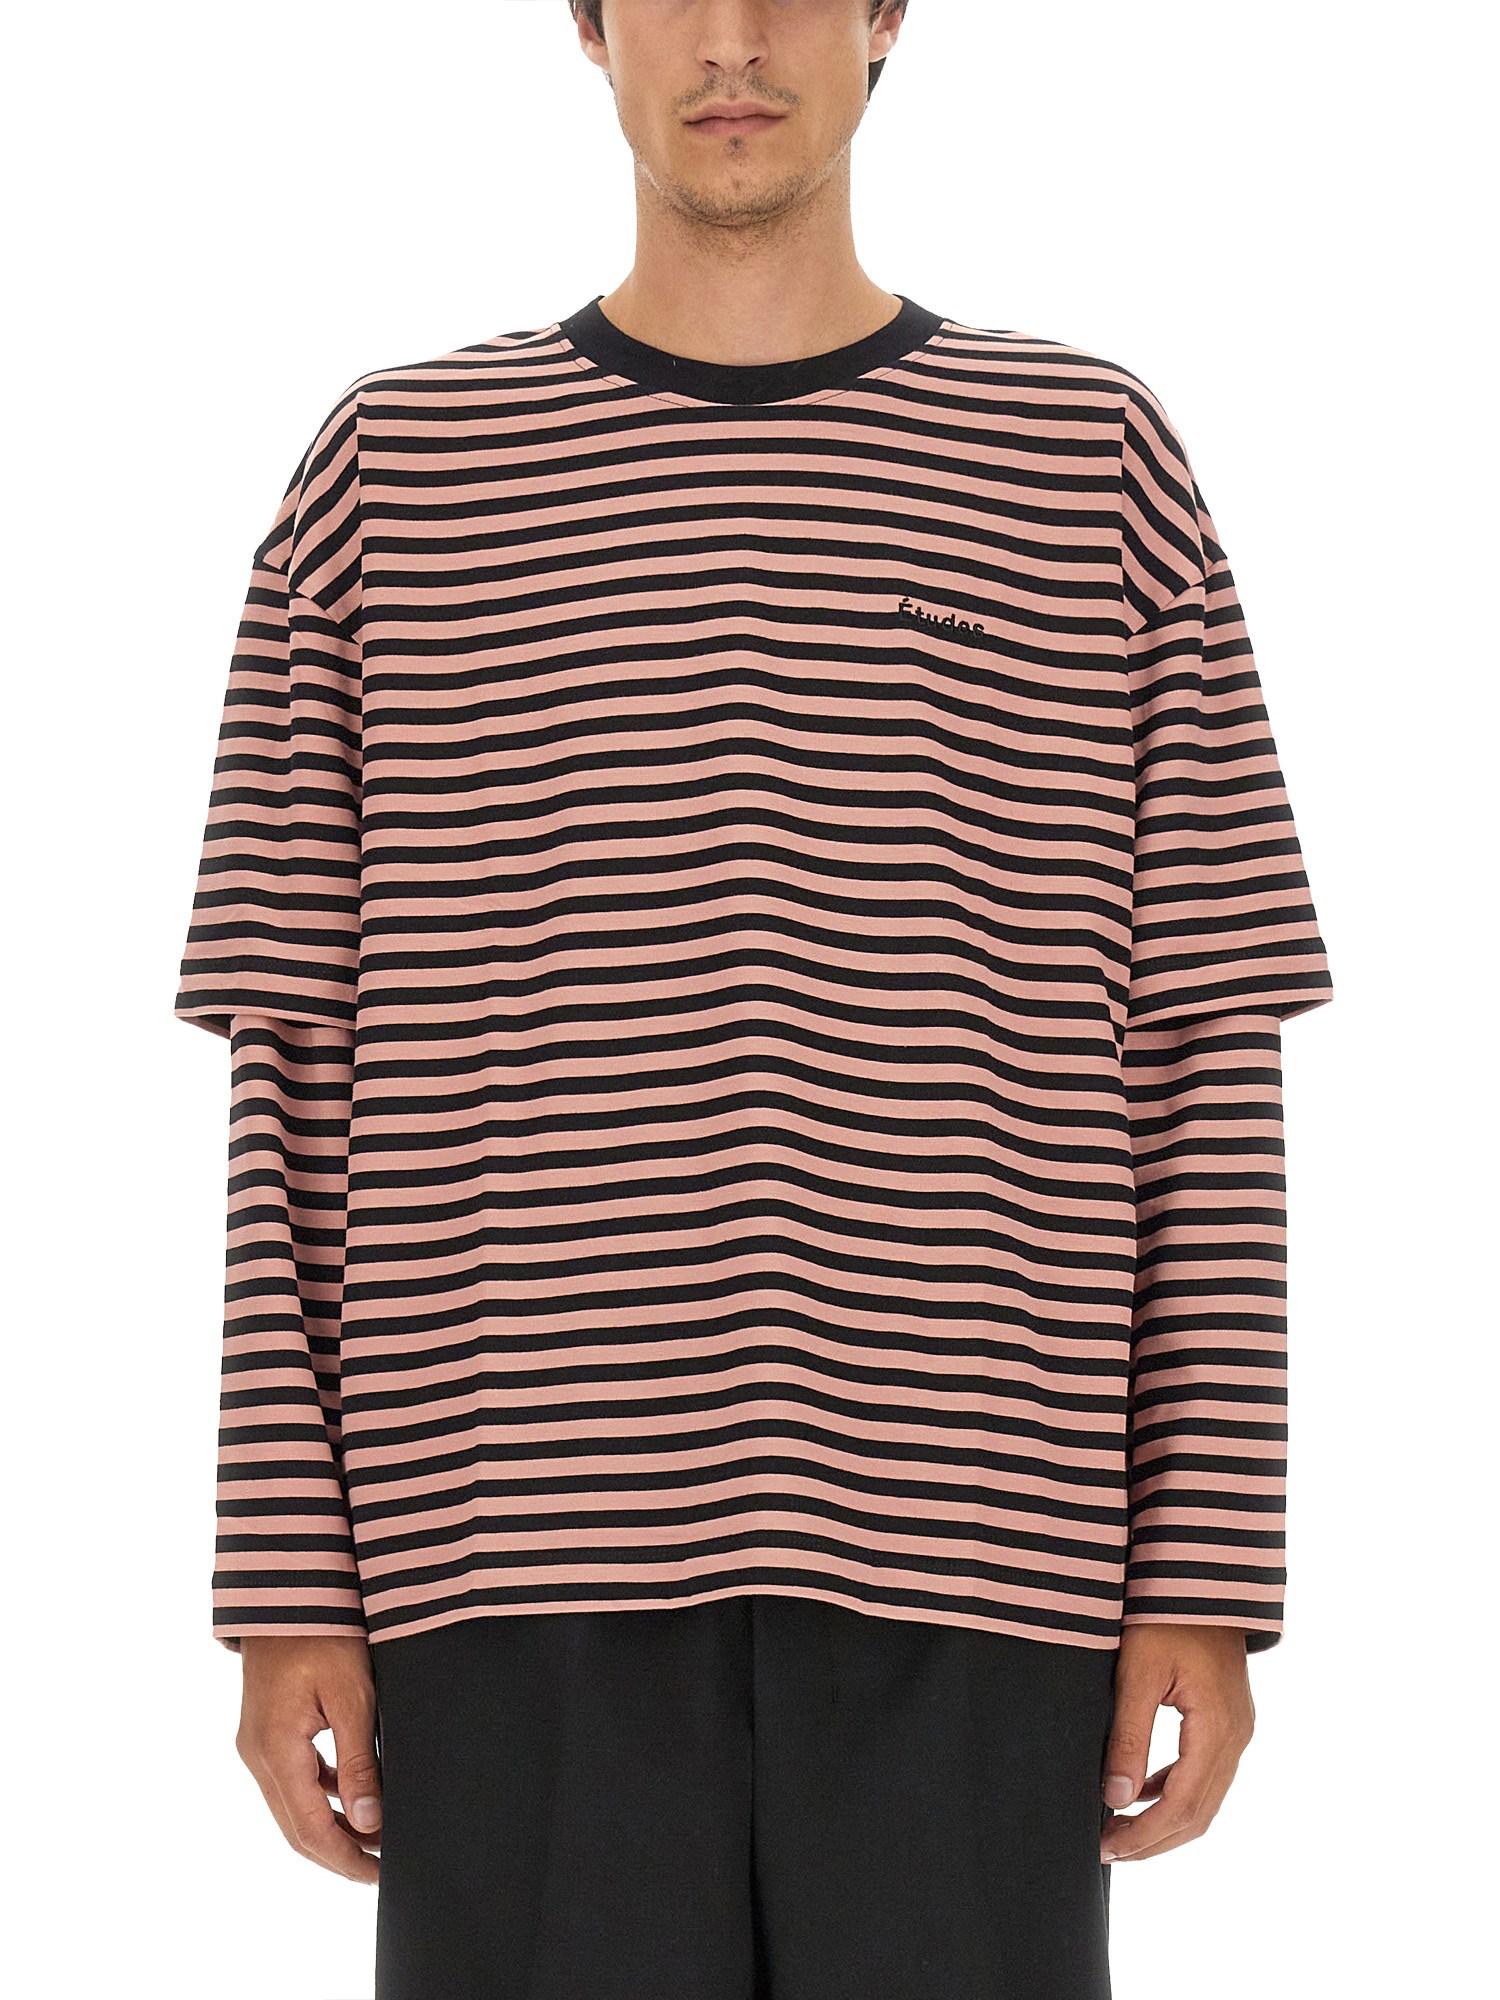 études t-shirt with stripe pattern